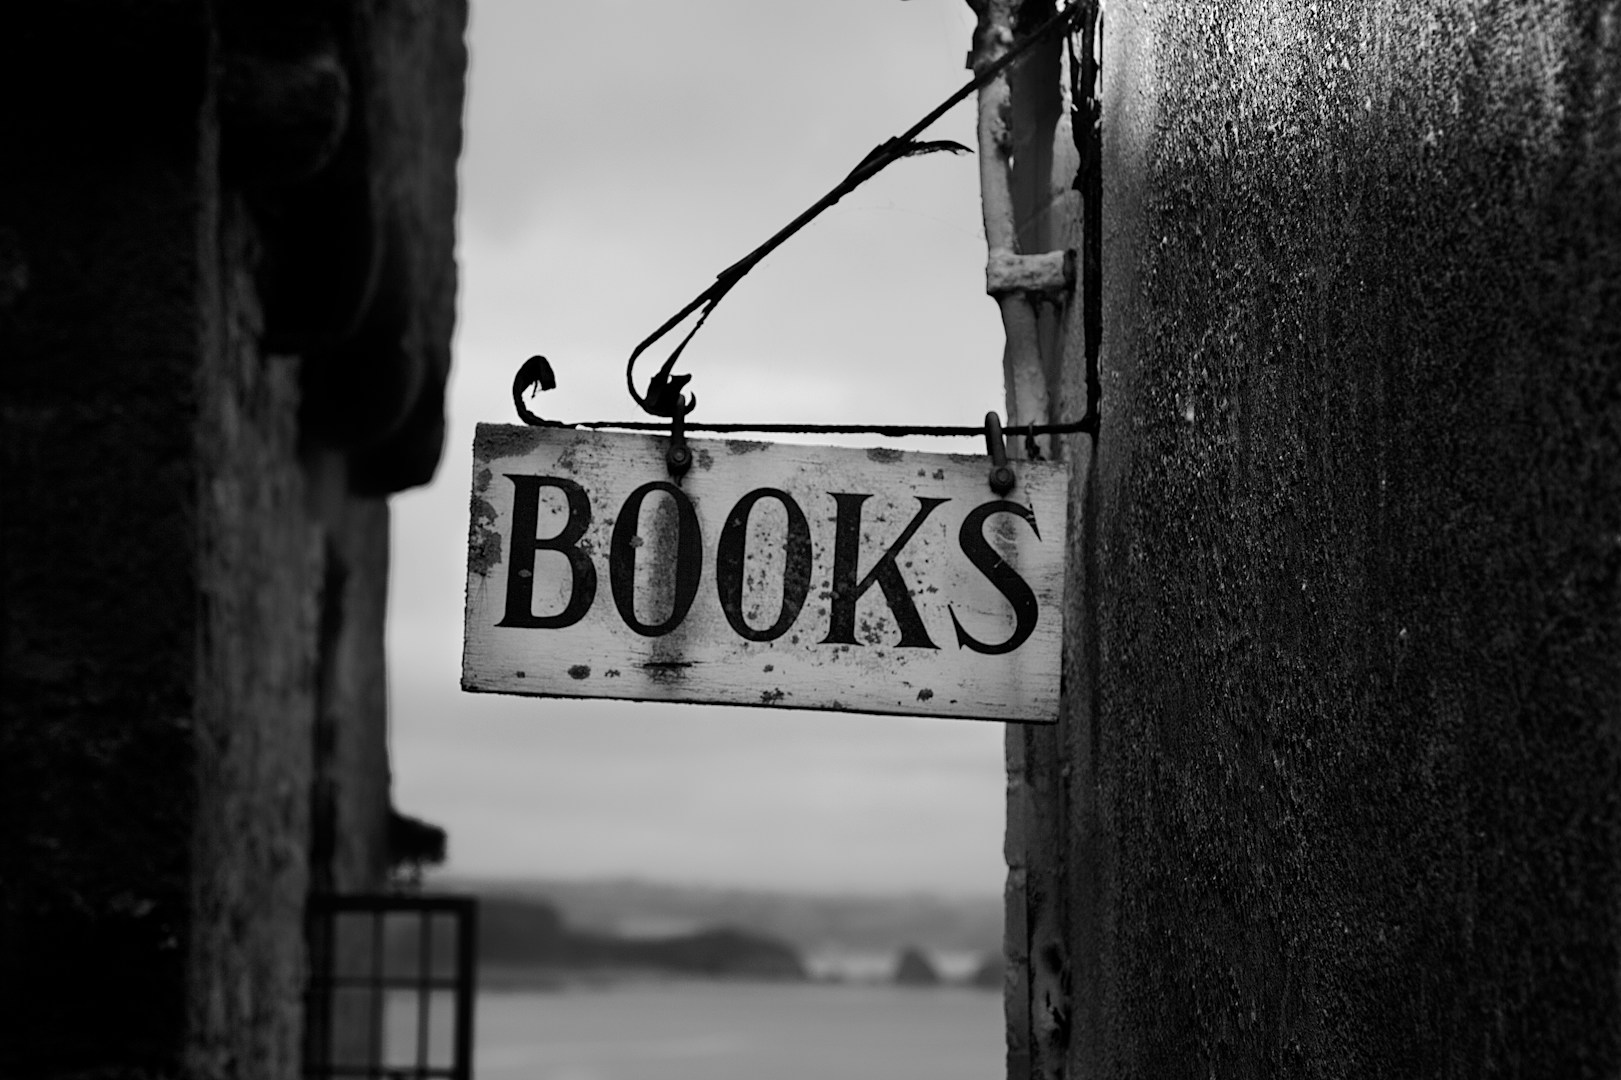 Antique bookshop sign